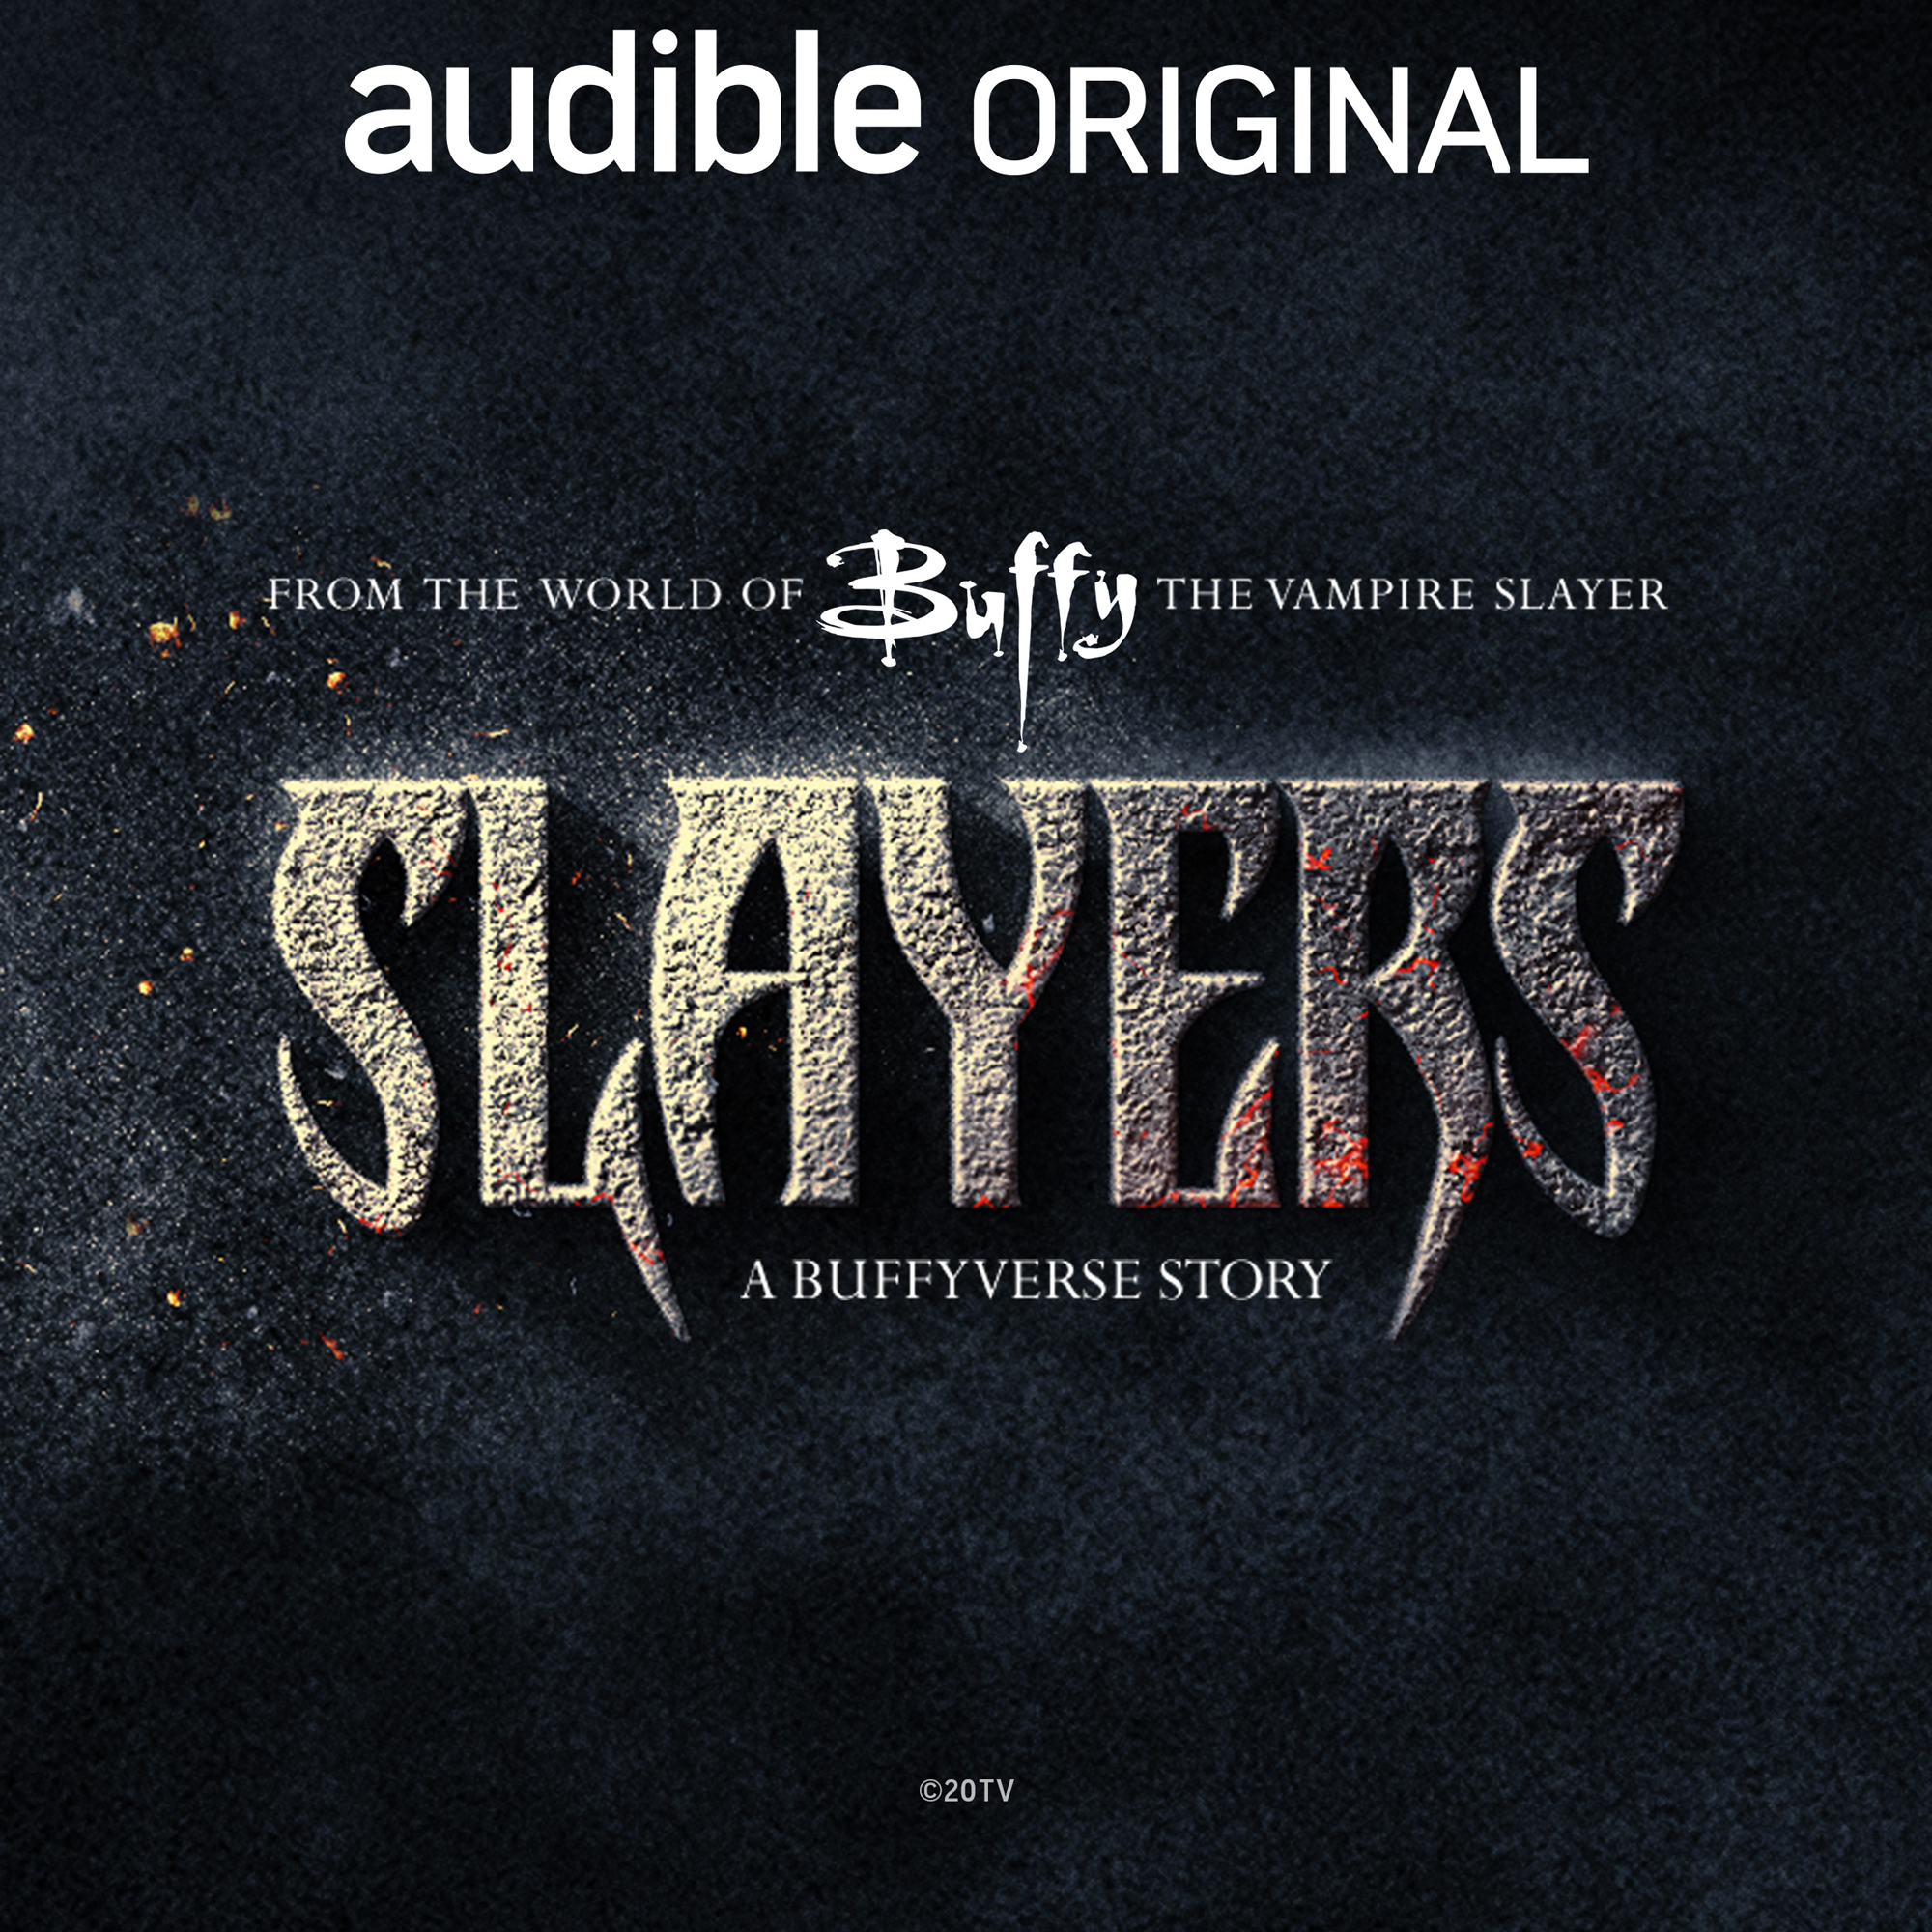 Slayers: A Buffyverse Story cover art